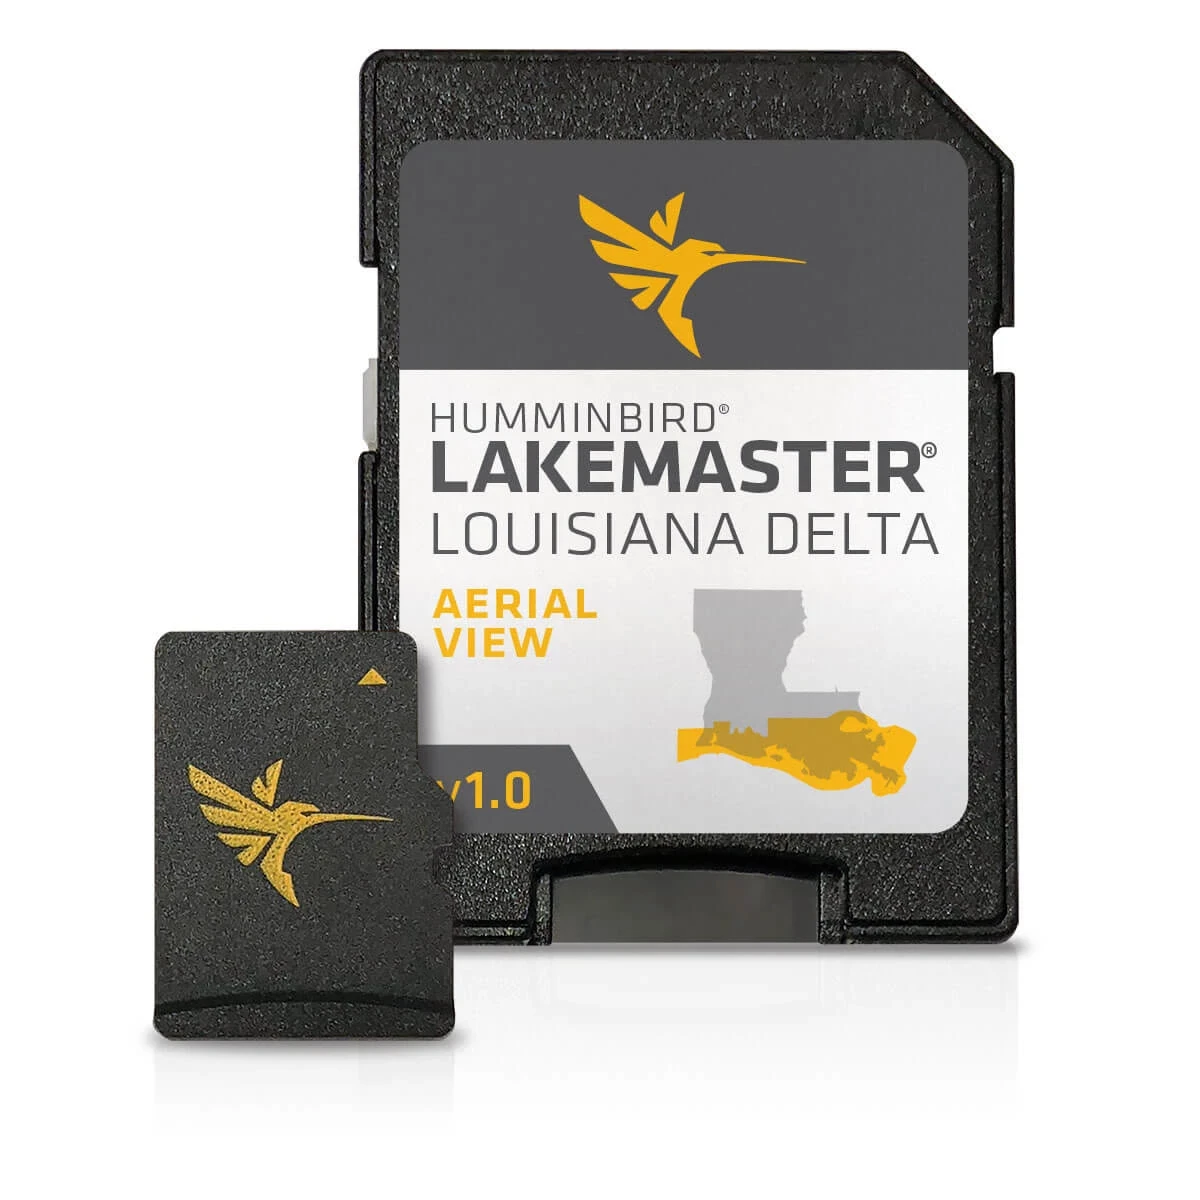 LakeMaster Louisiana Delta Aerial View v1 SD card with micro SD card